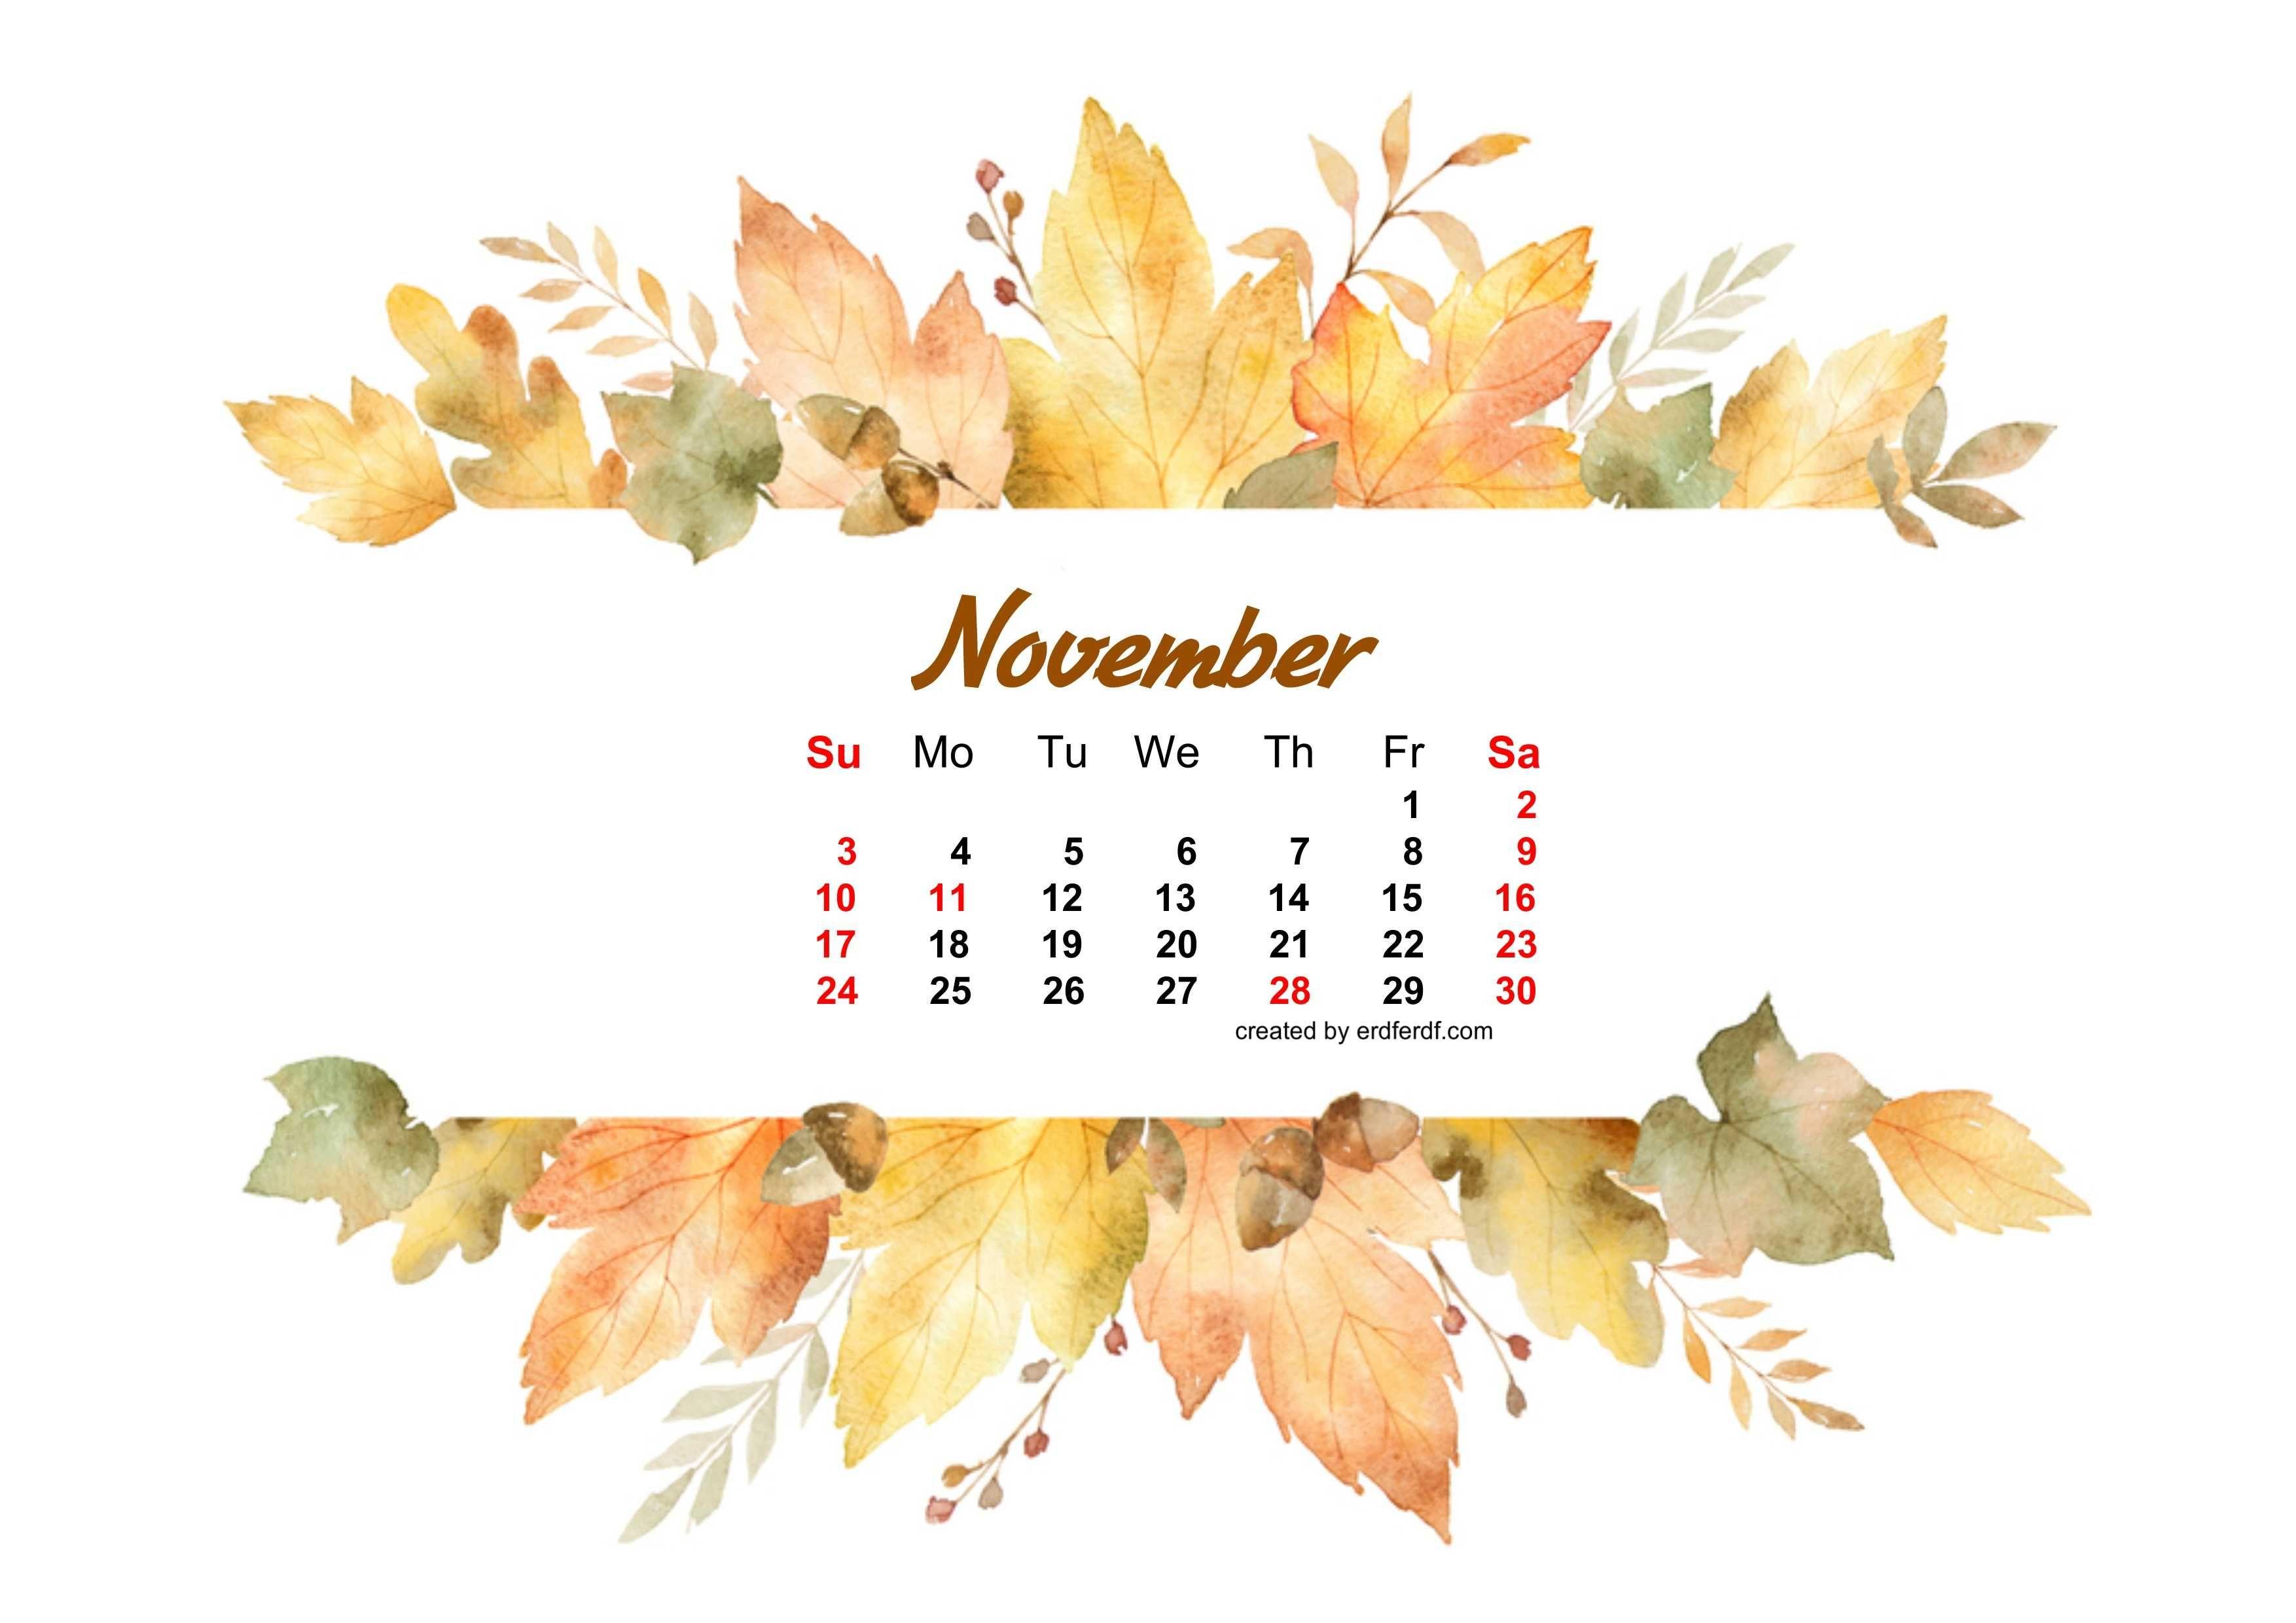 Watercolor Leaf Dried November 2019 Calendar Picture Wallpaper